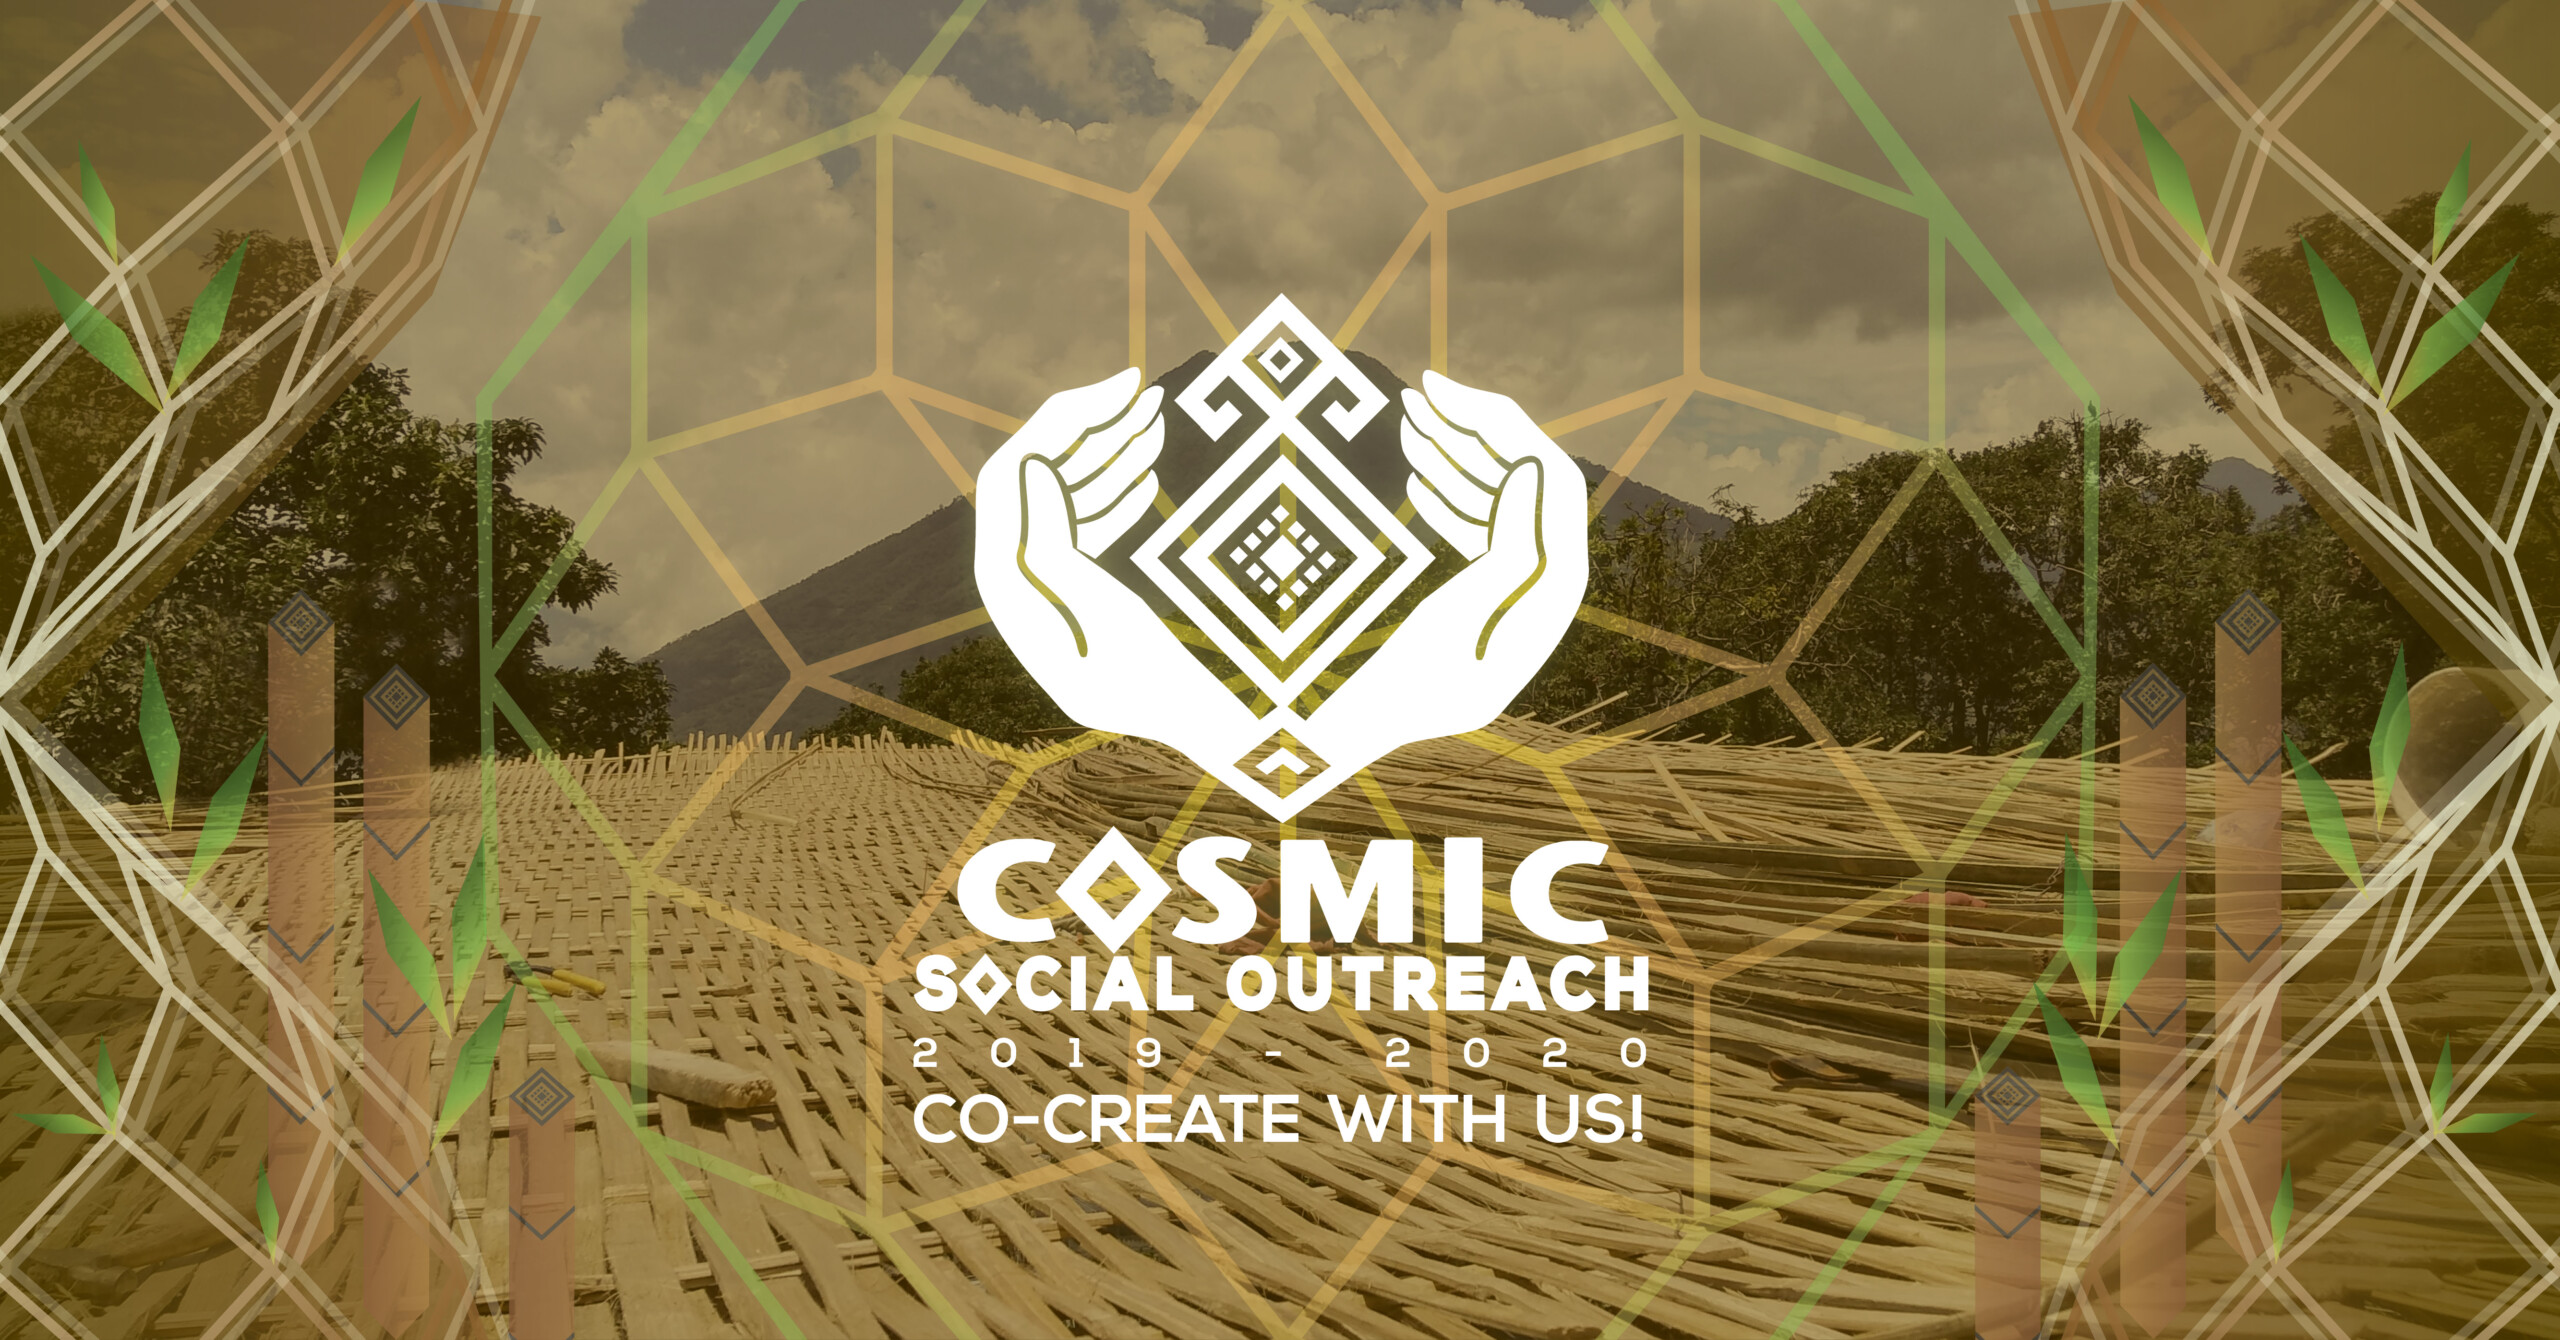 Cosmic Social Outreach